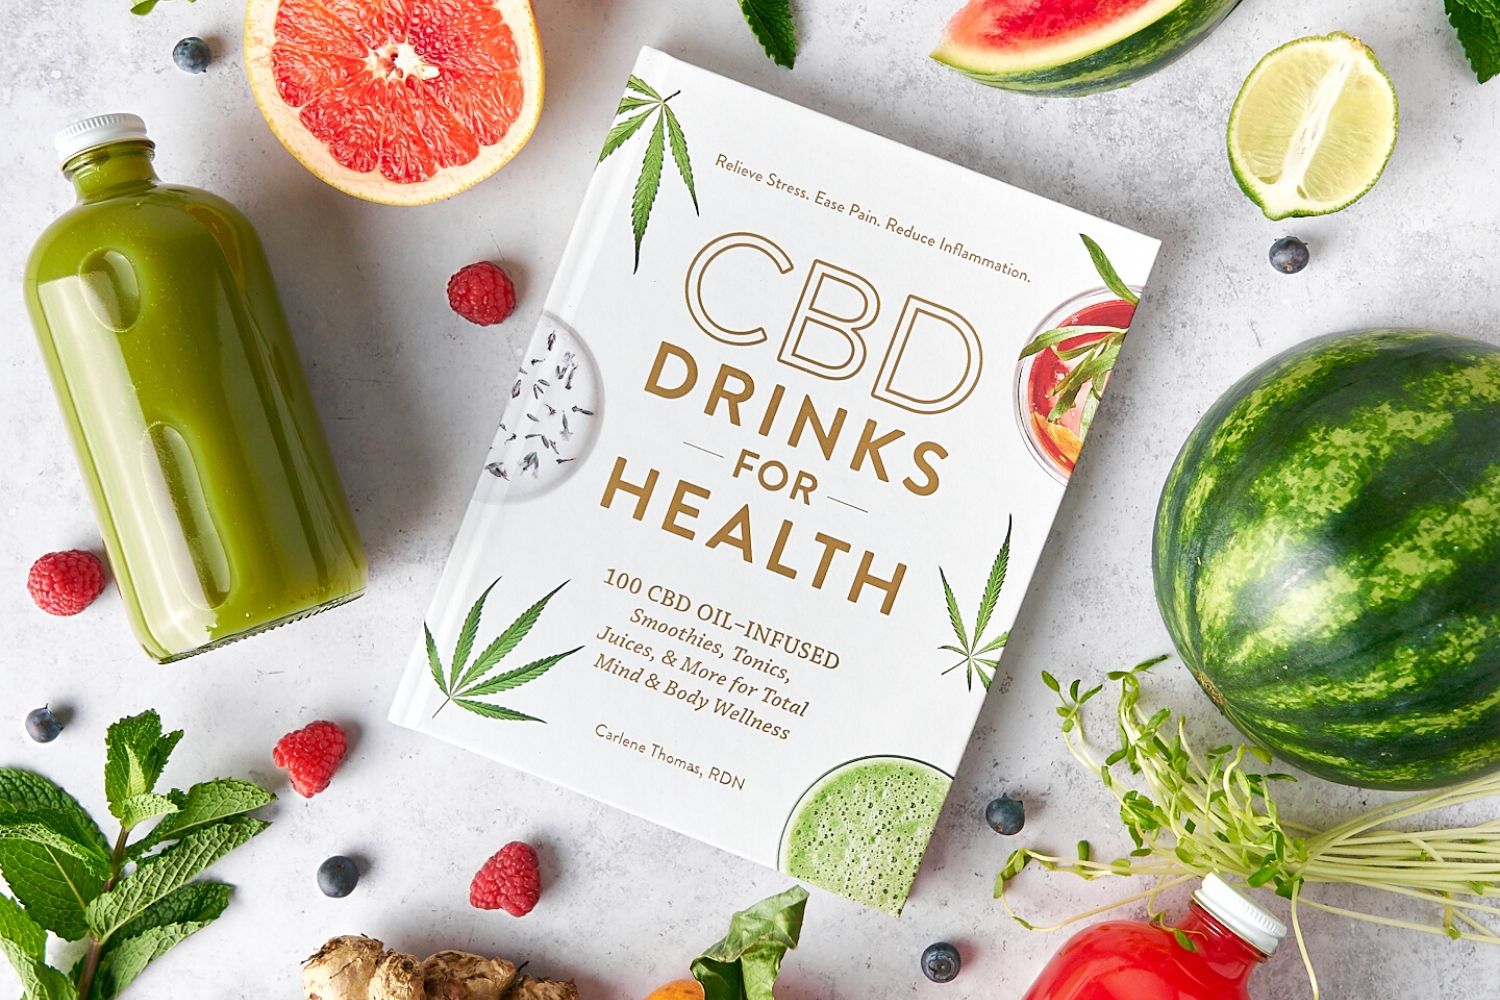 CBD-drinks-for-health-book-by-nutritinal-CBD-expert-Carlene